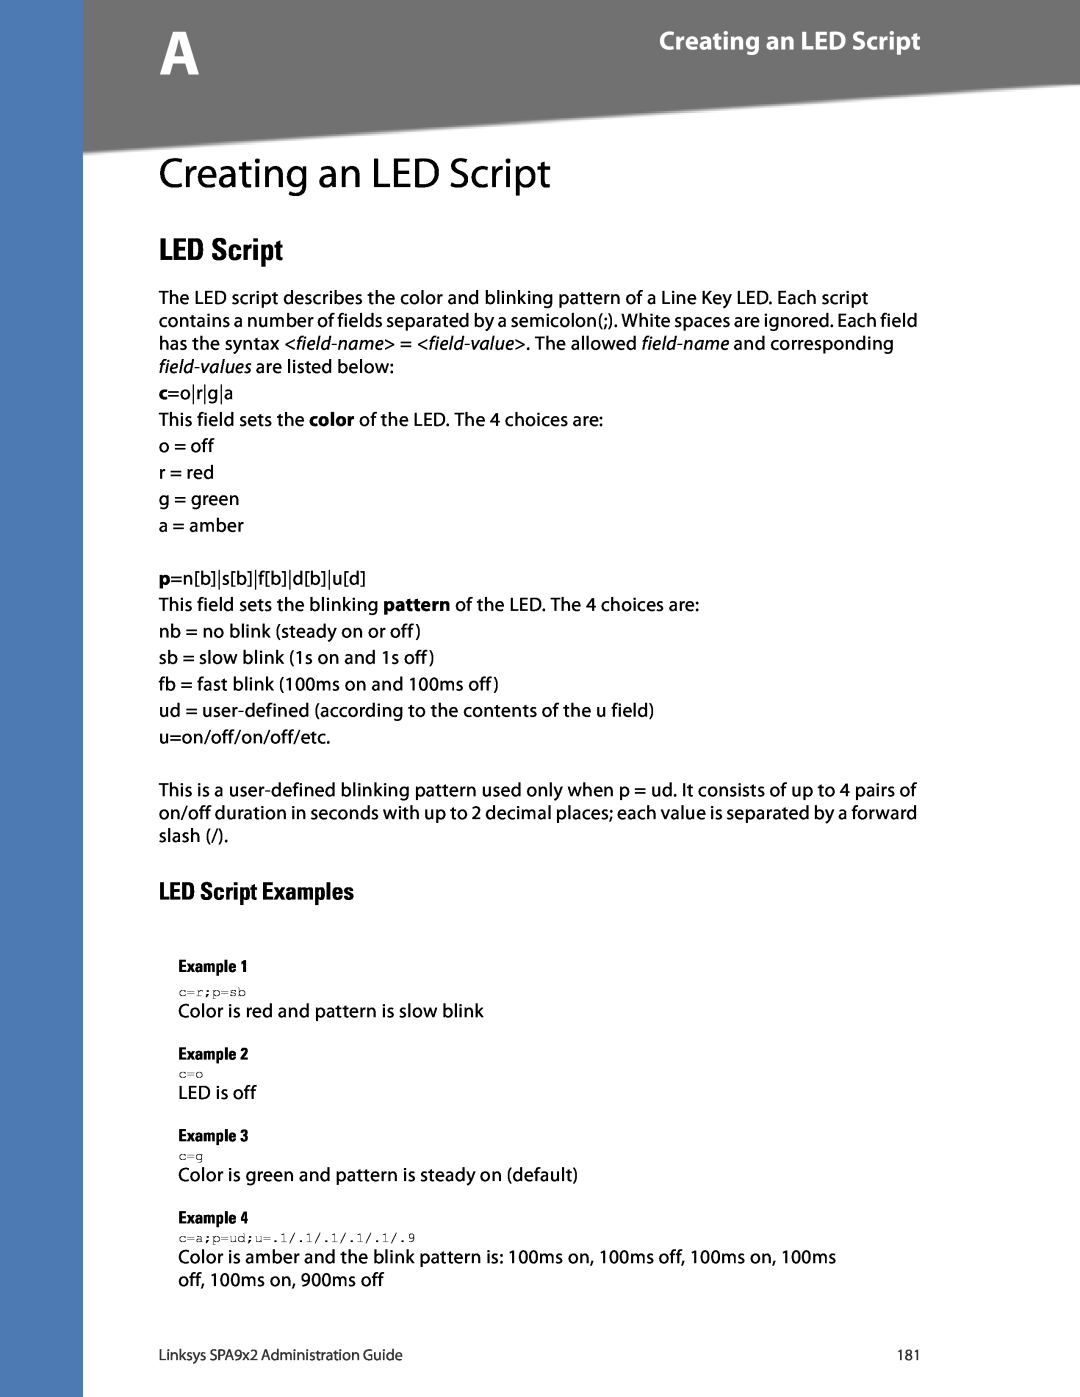 Linksys SPA962, SPA942, SPA932, SPA922 manual Creating an LED Script, LED Script Examples 